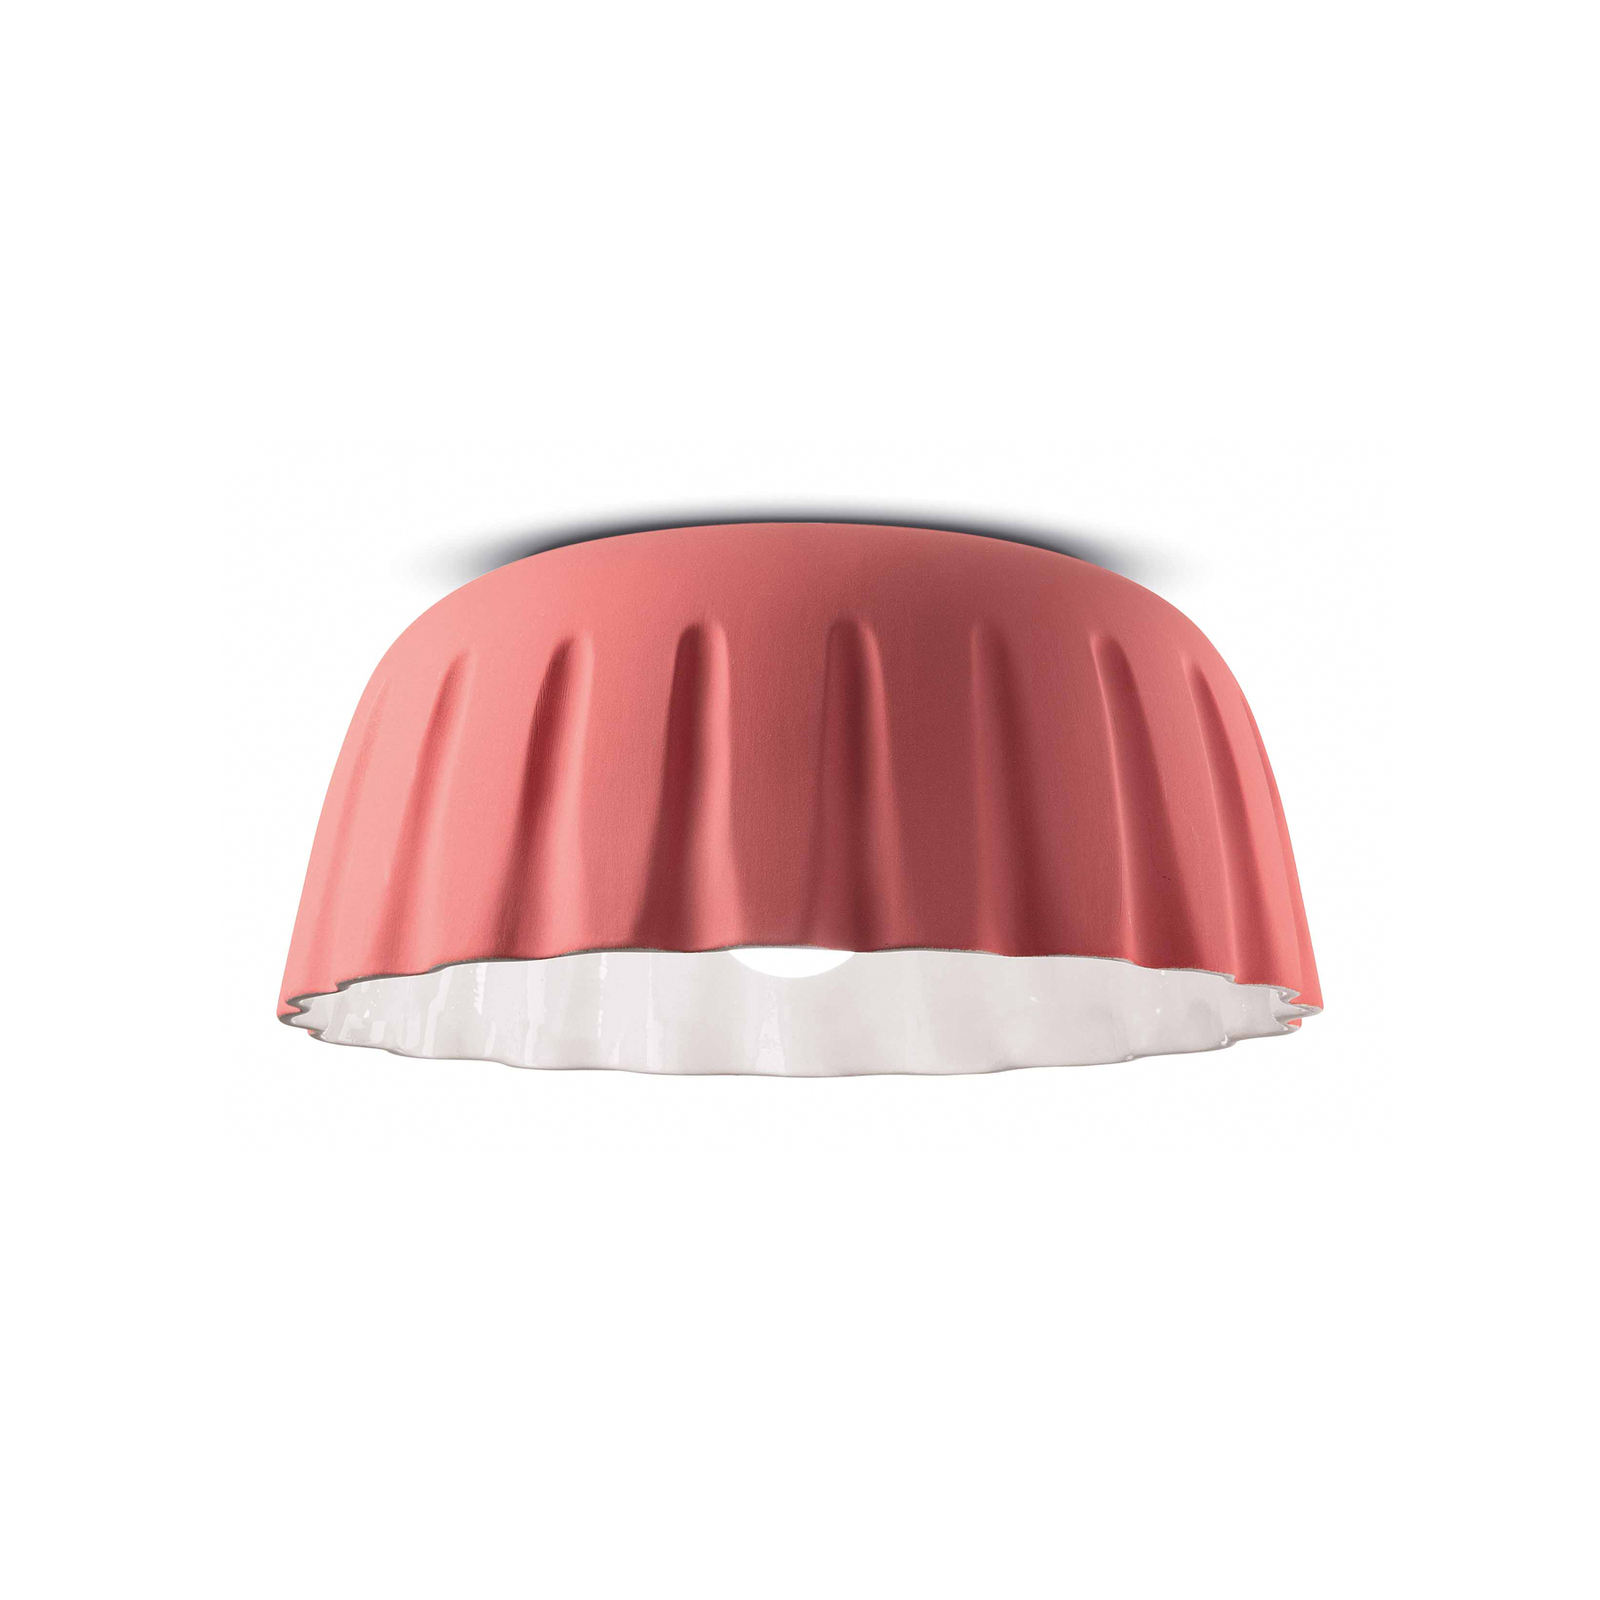 Madame Gres ceramic ceiling light height 17 cm, pink